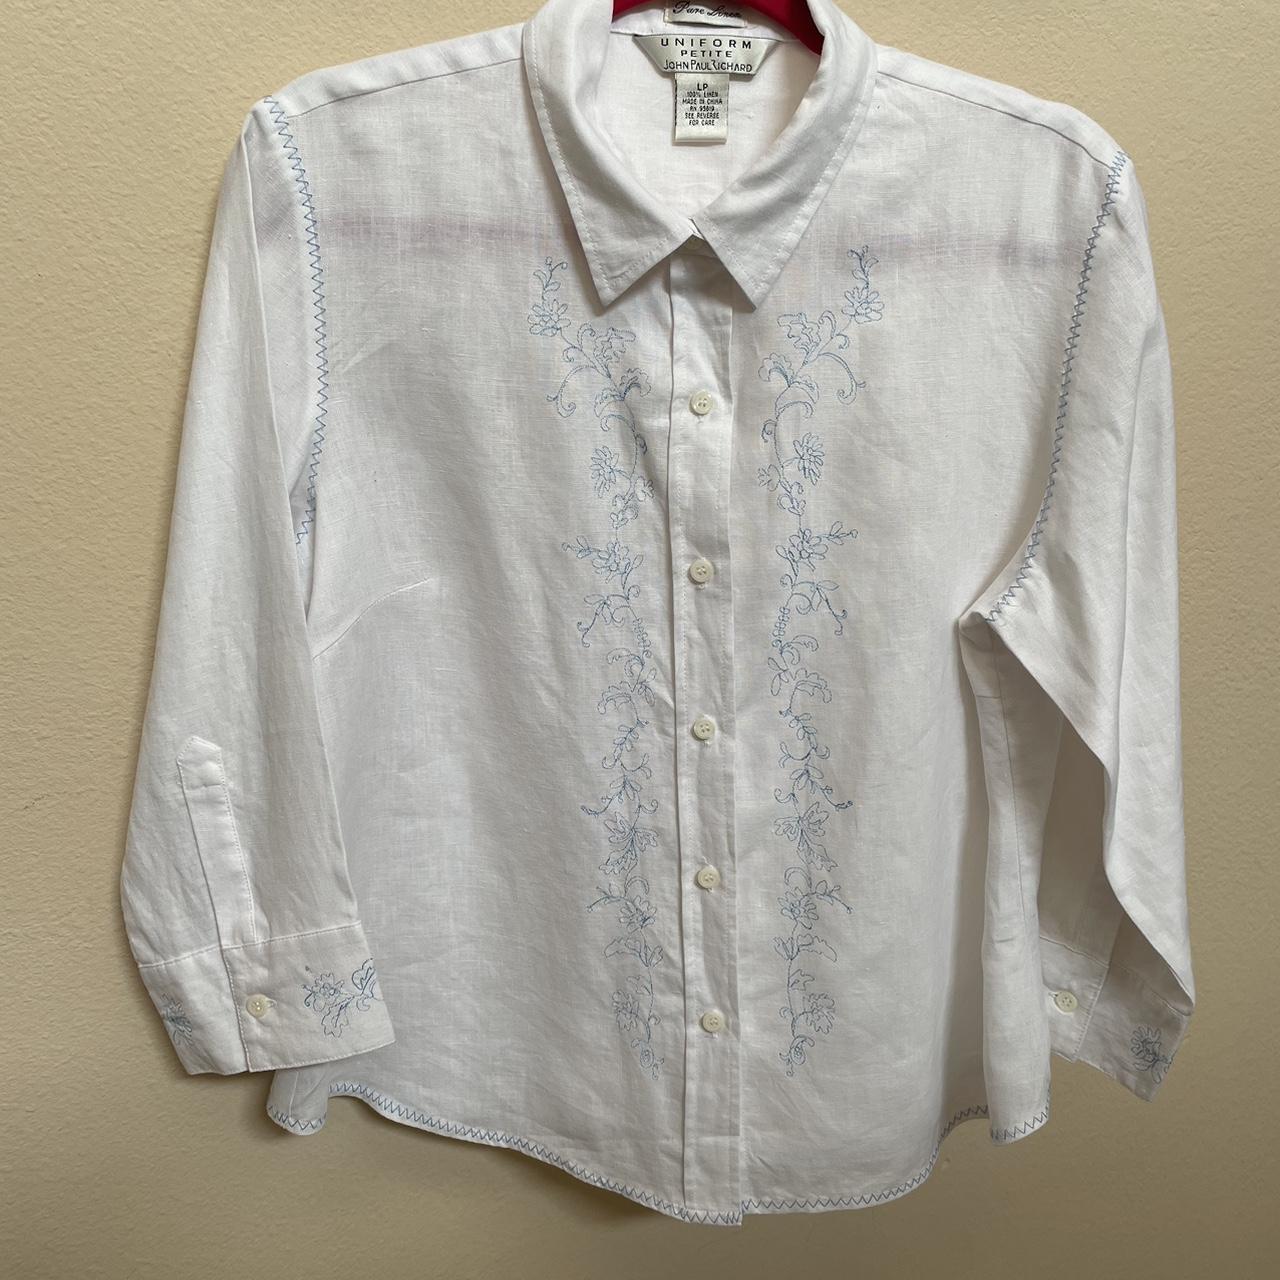 John Paul Richard Women's White and Blue Shirt